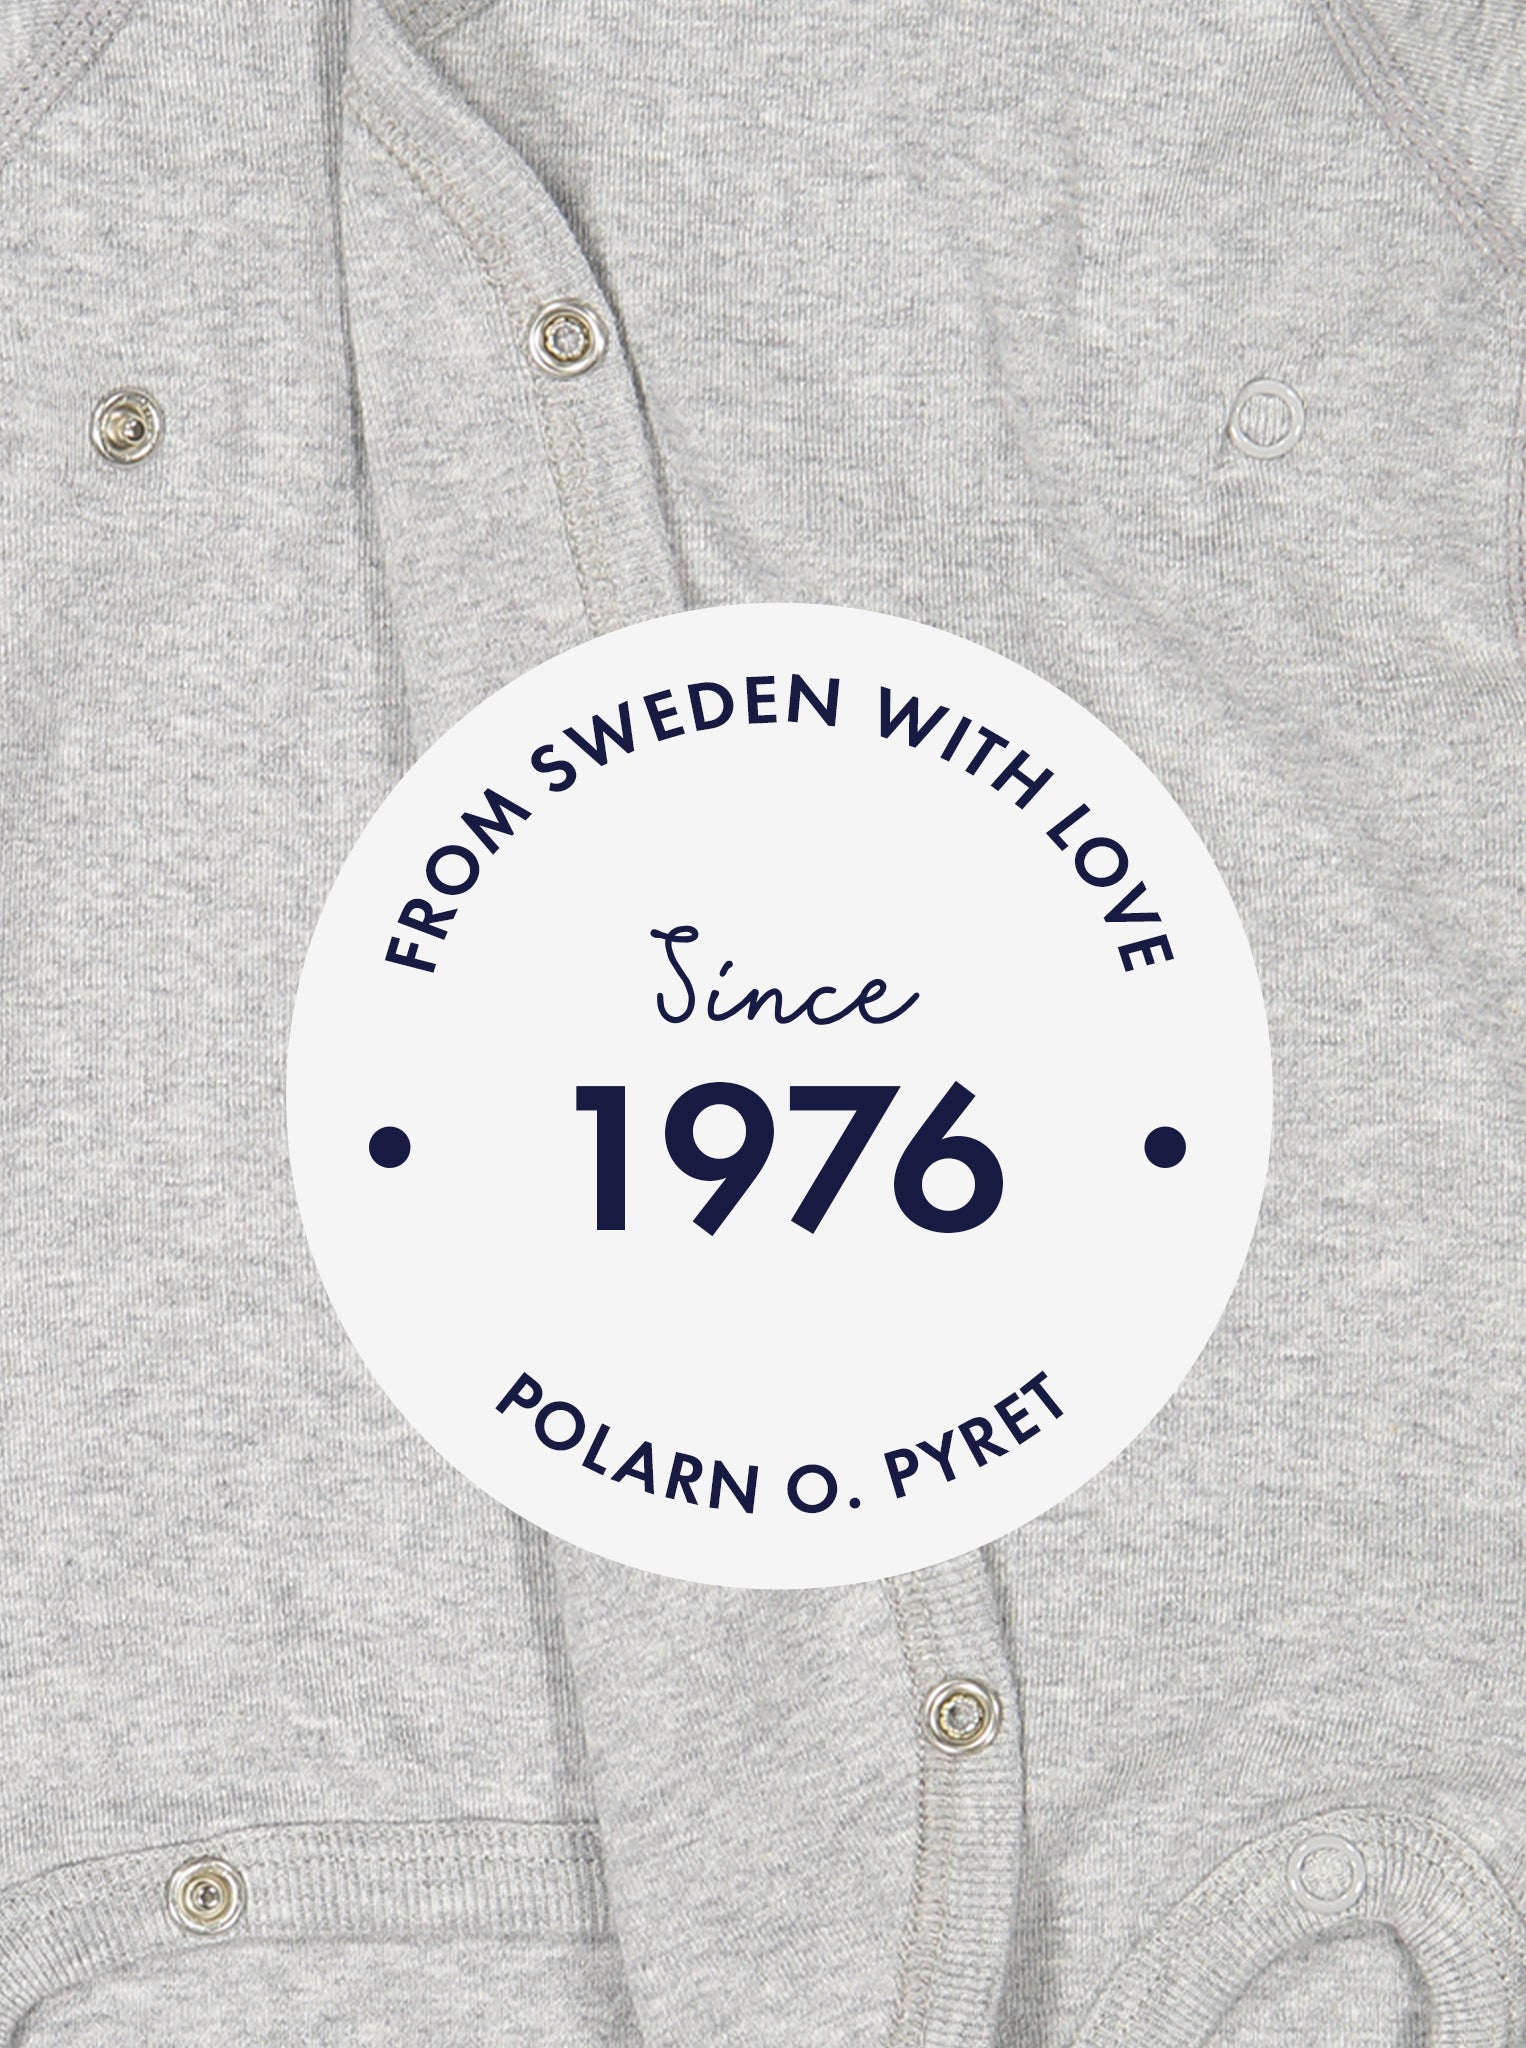 Polarn o. pyret 1976 logo on grey babygrow